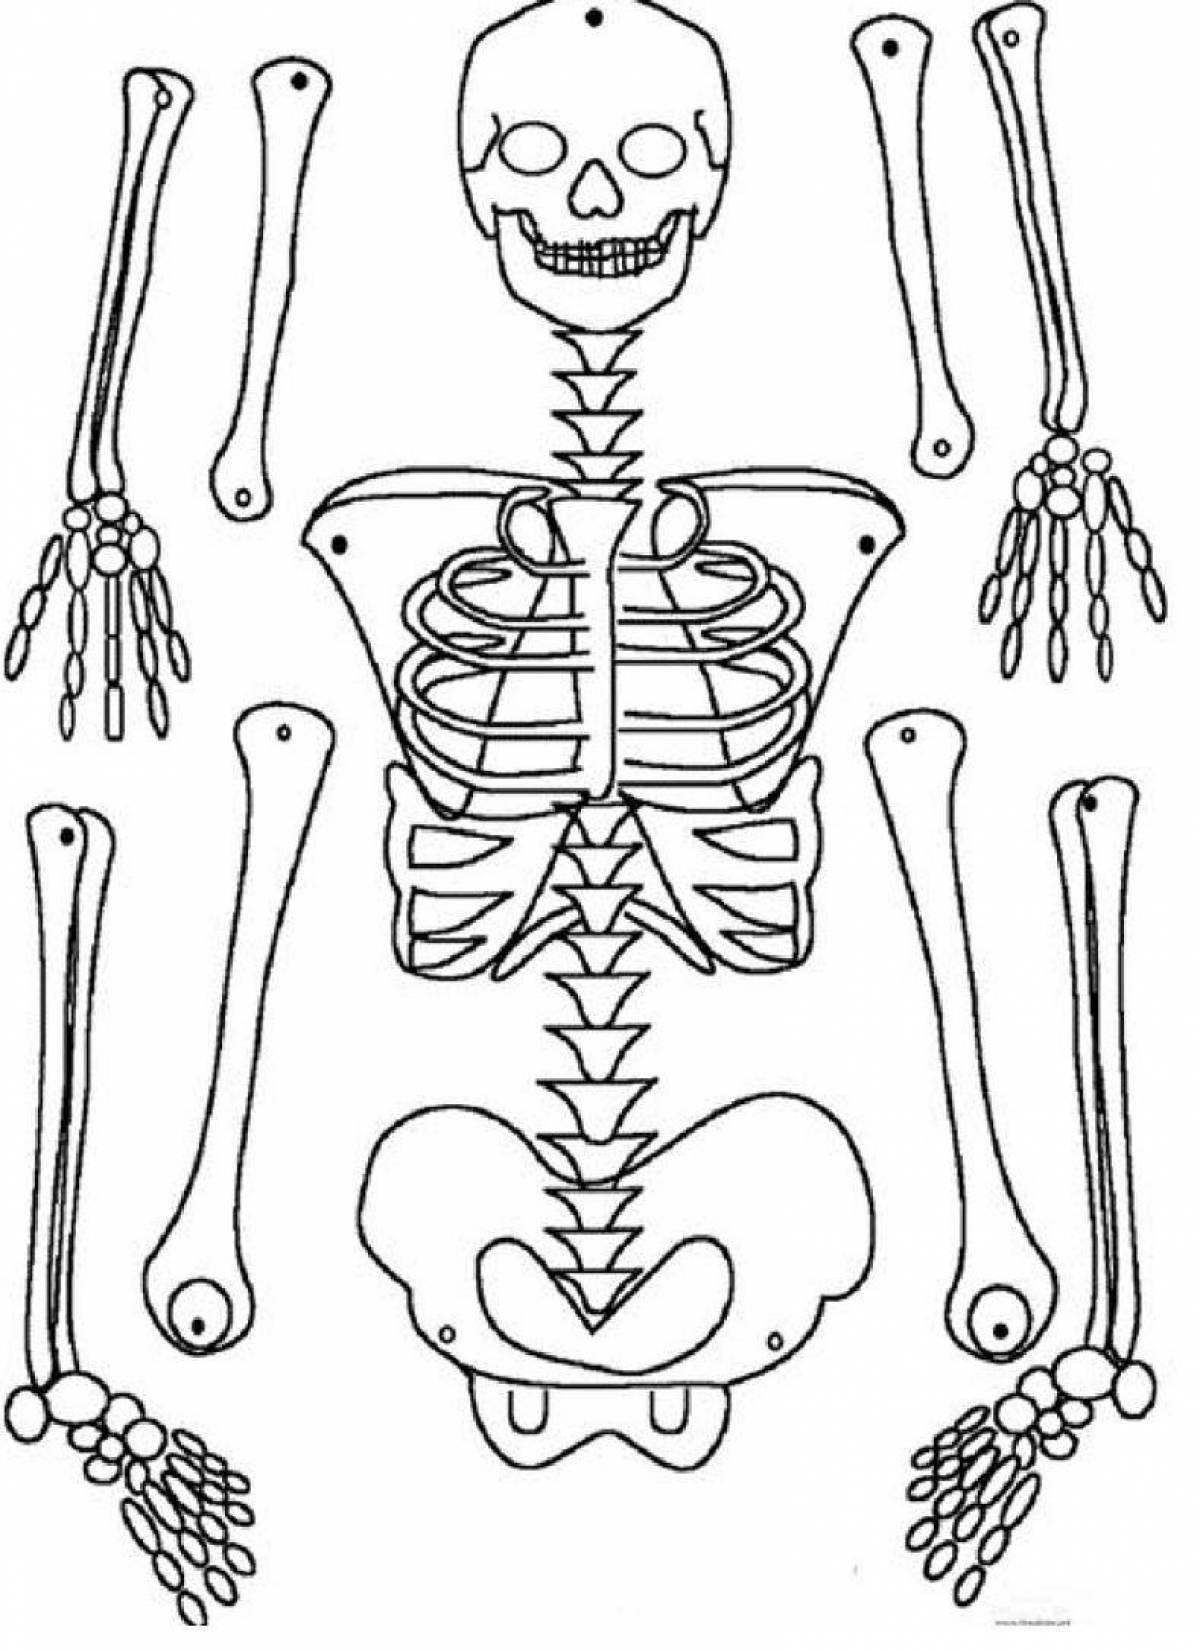 Innovative human skeleton coloring page